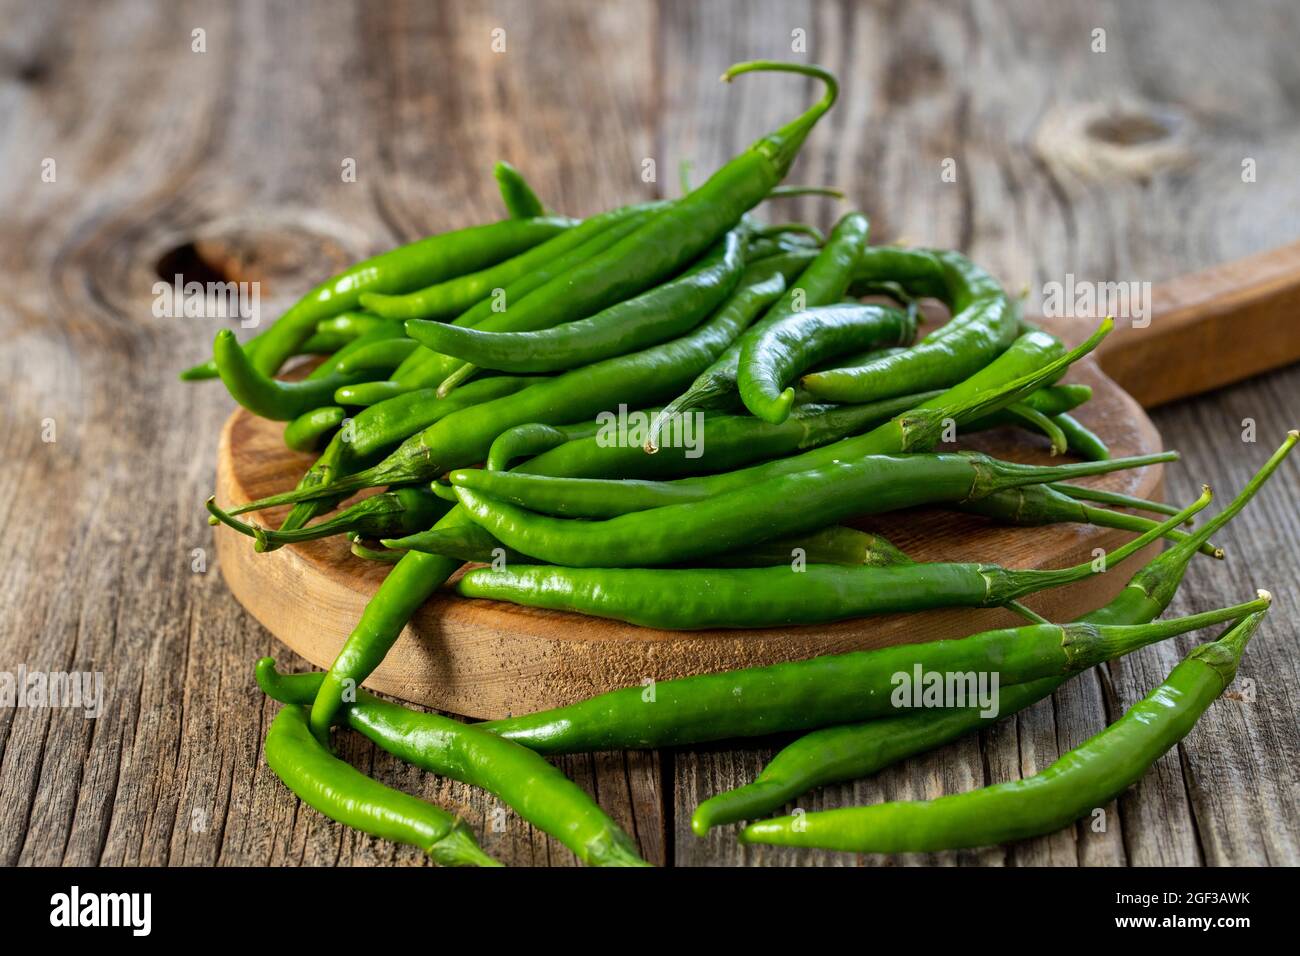 fresh ripe green pepper on wood background Stock Photo